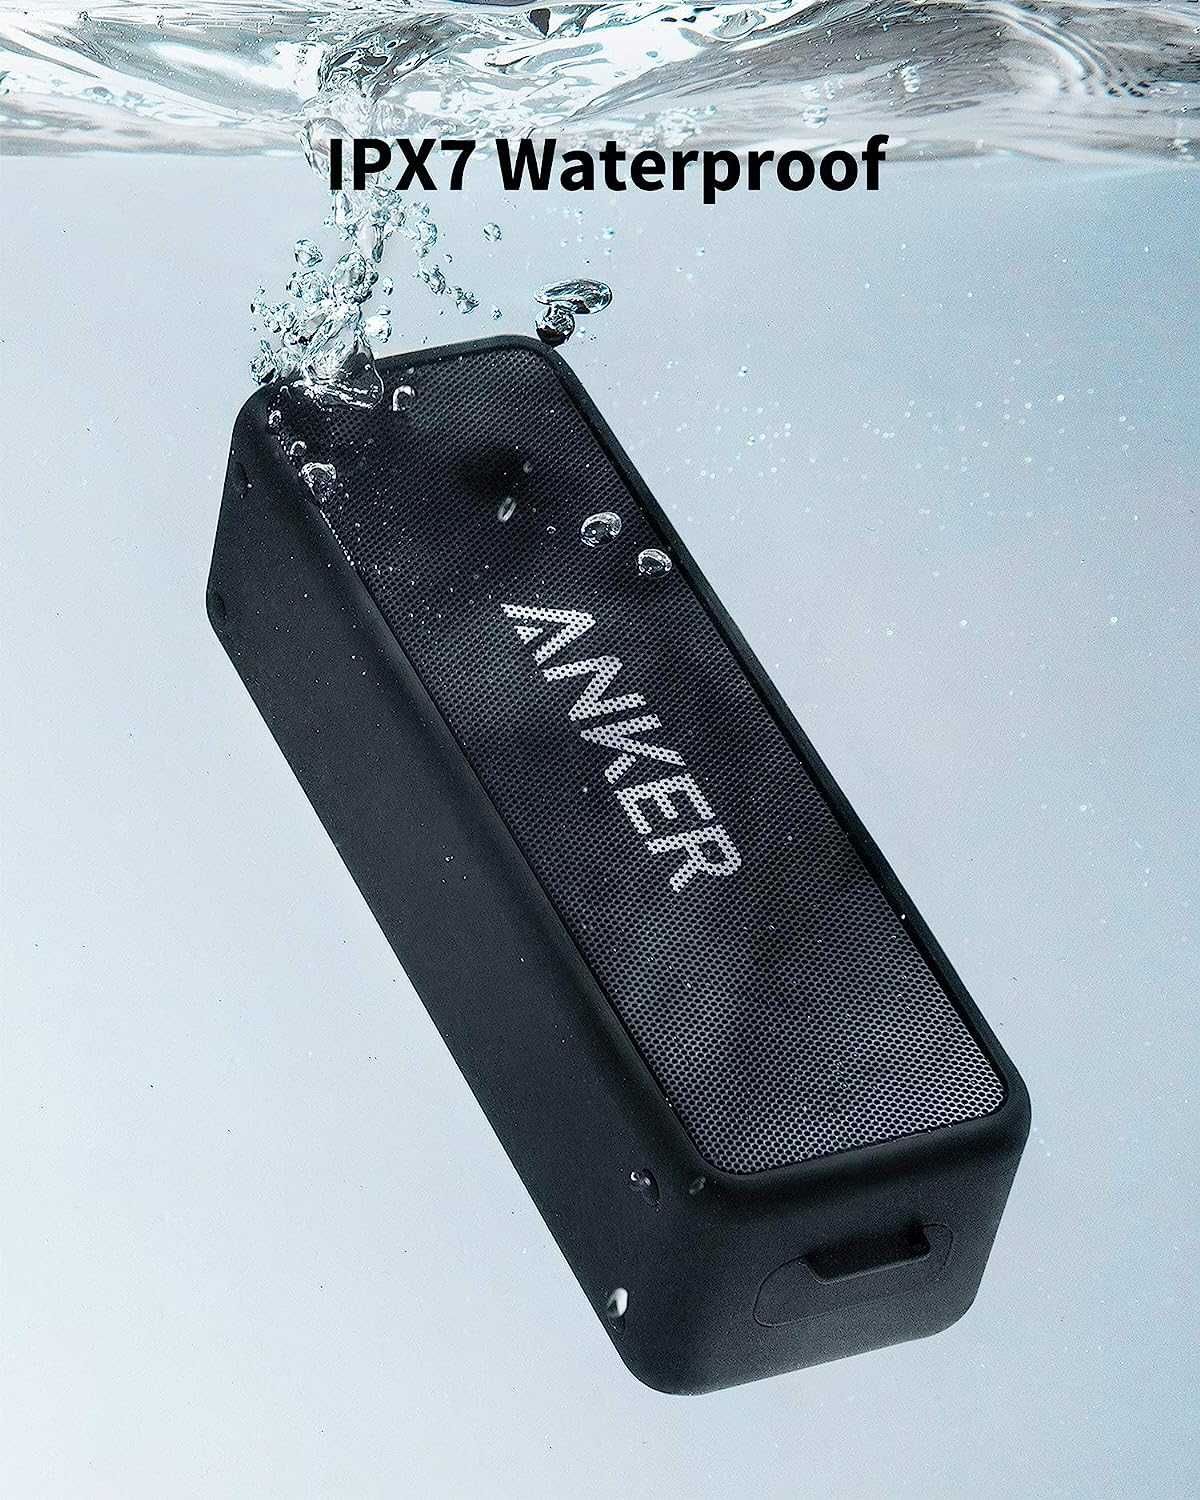 Anker Soundcore 2 Portable Bluetooth Speaker  | Доставка